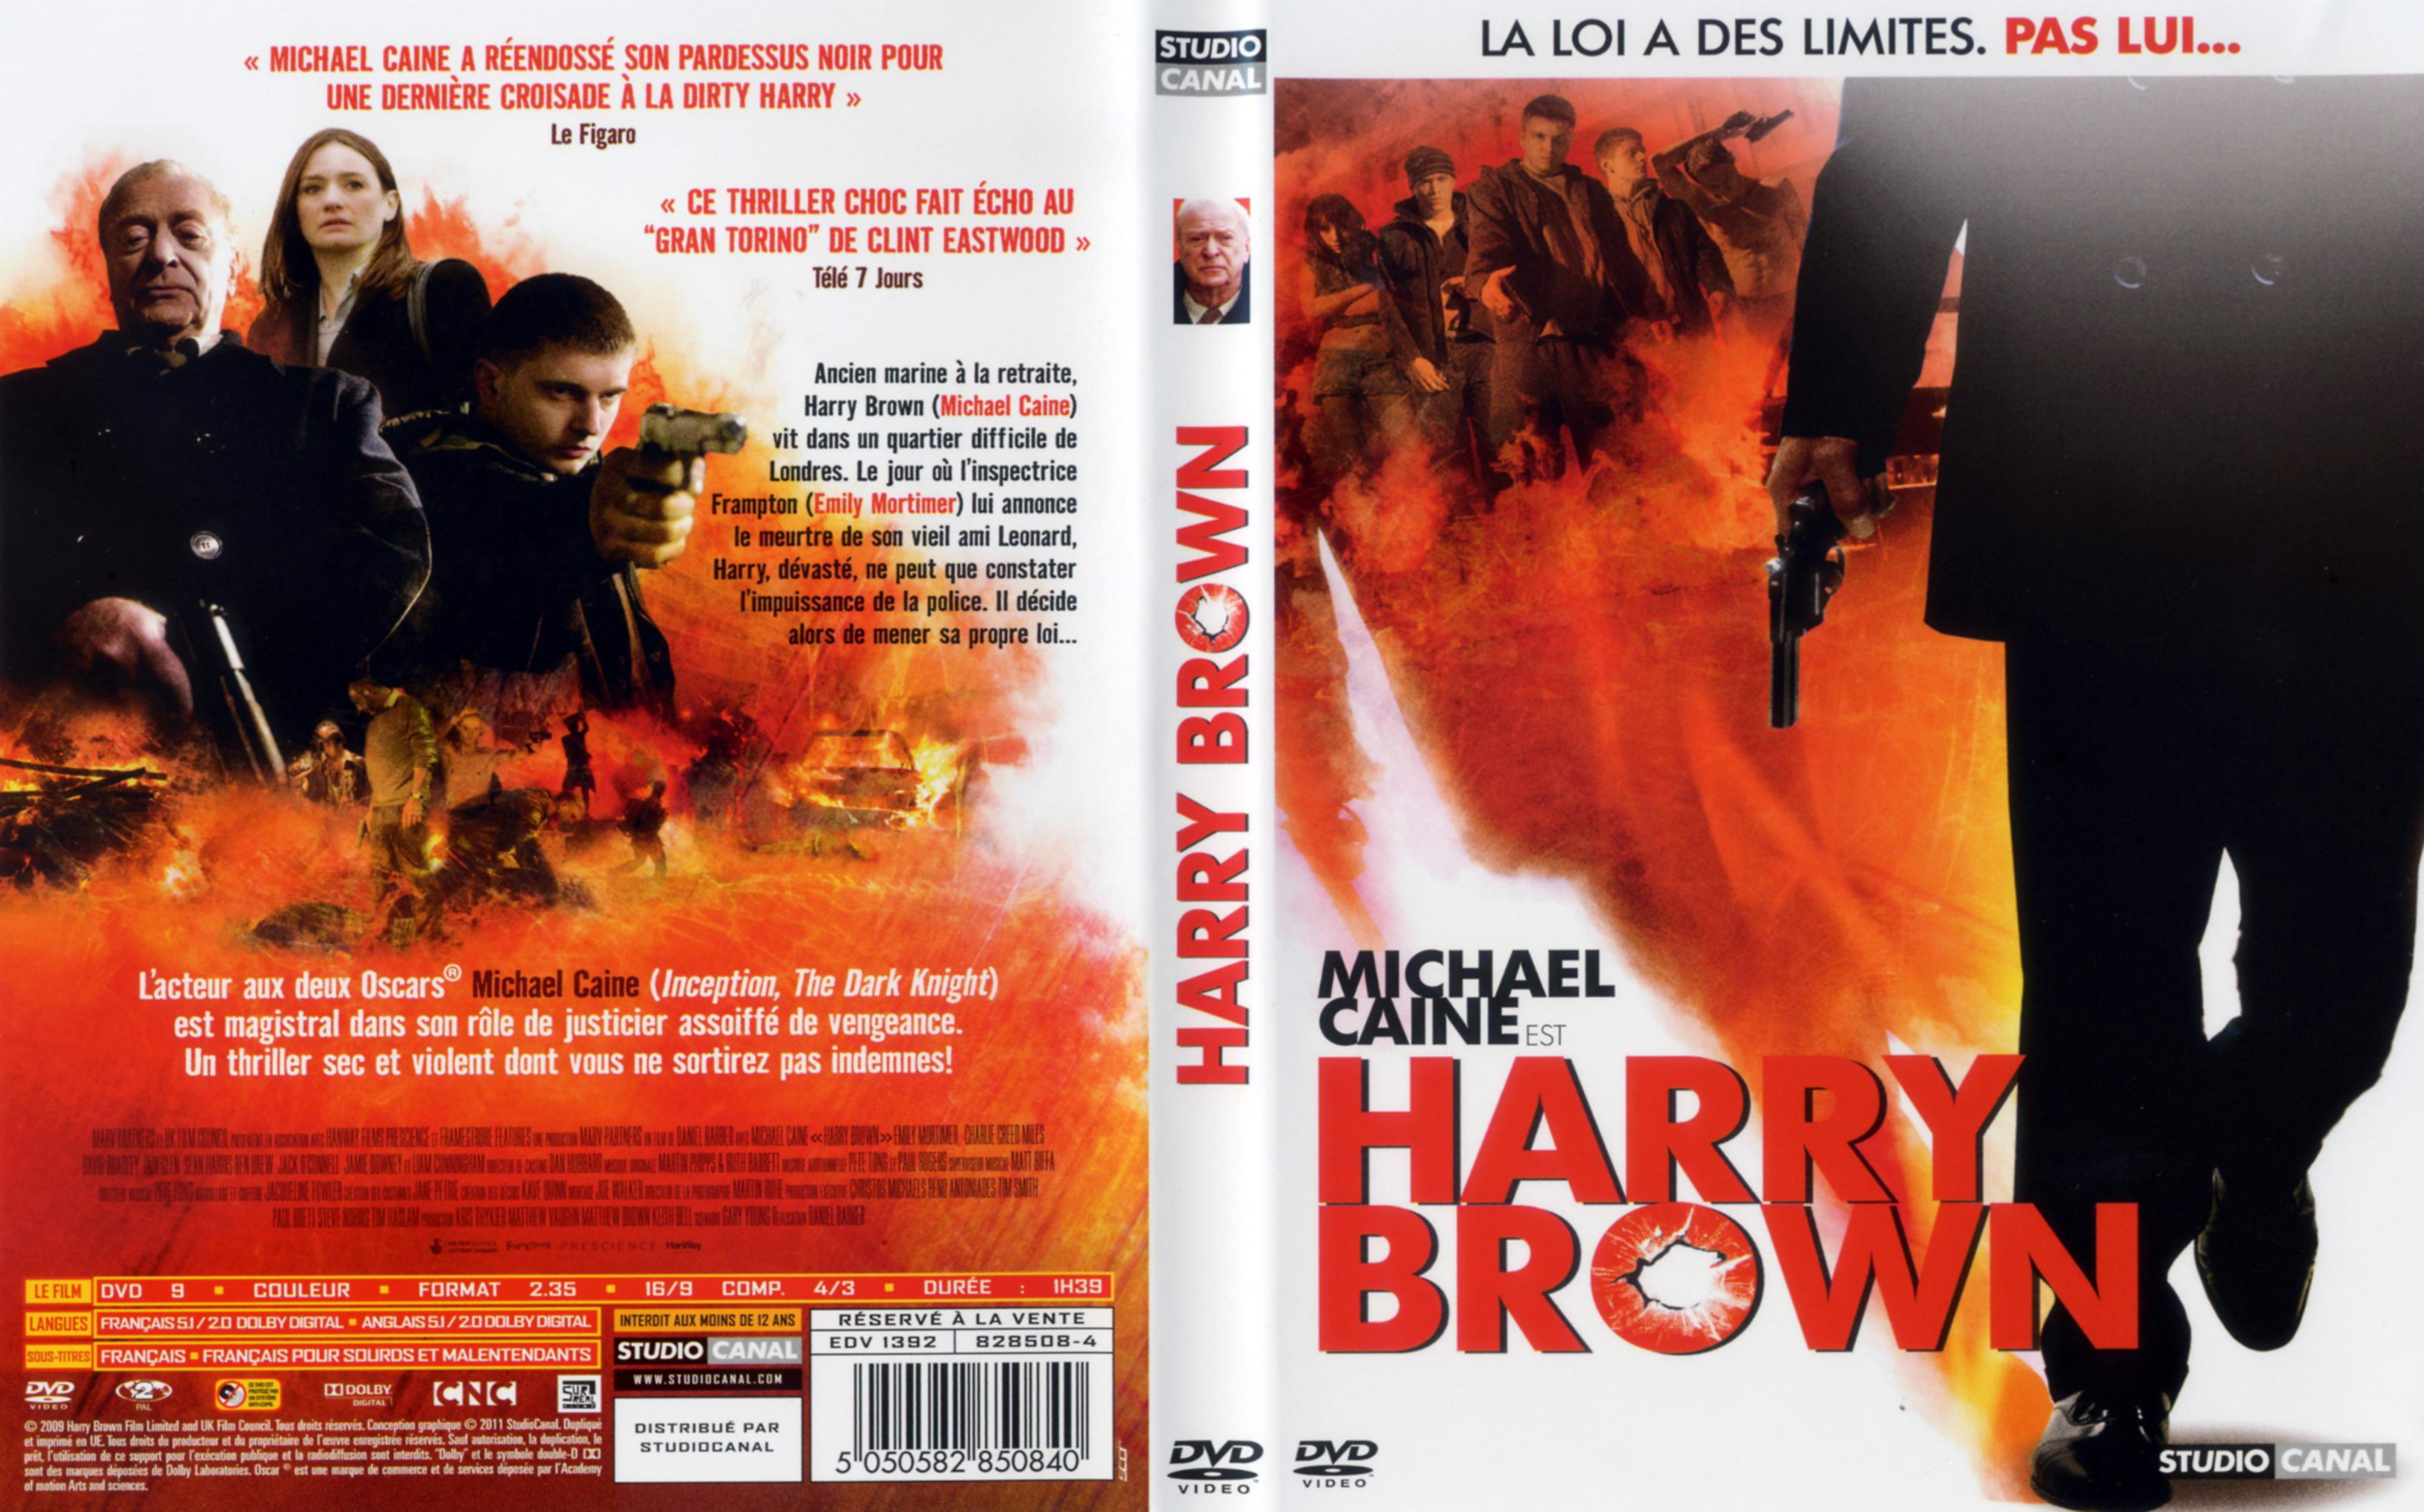 Jaquette DVD Harry Brown